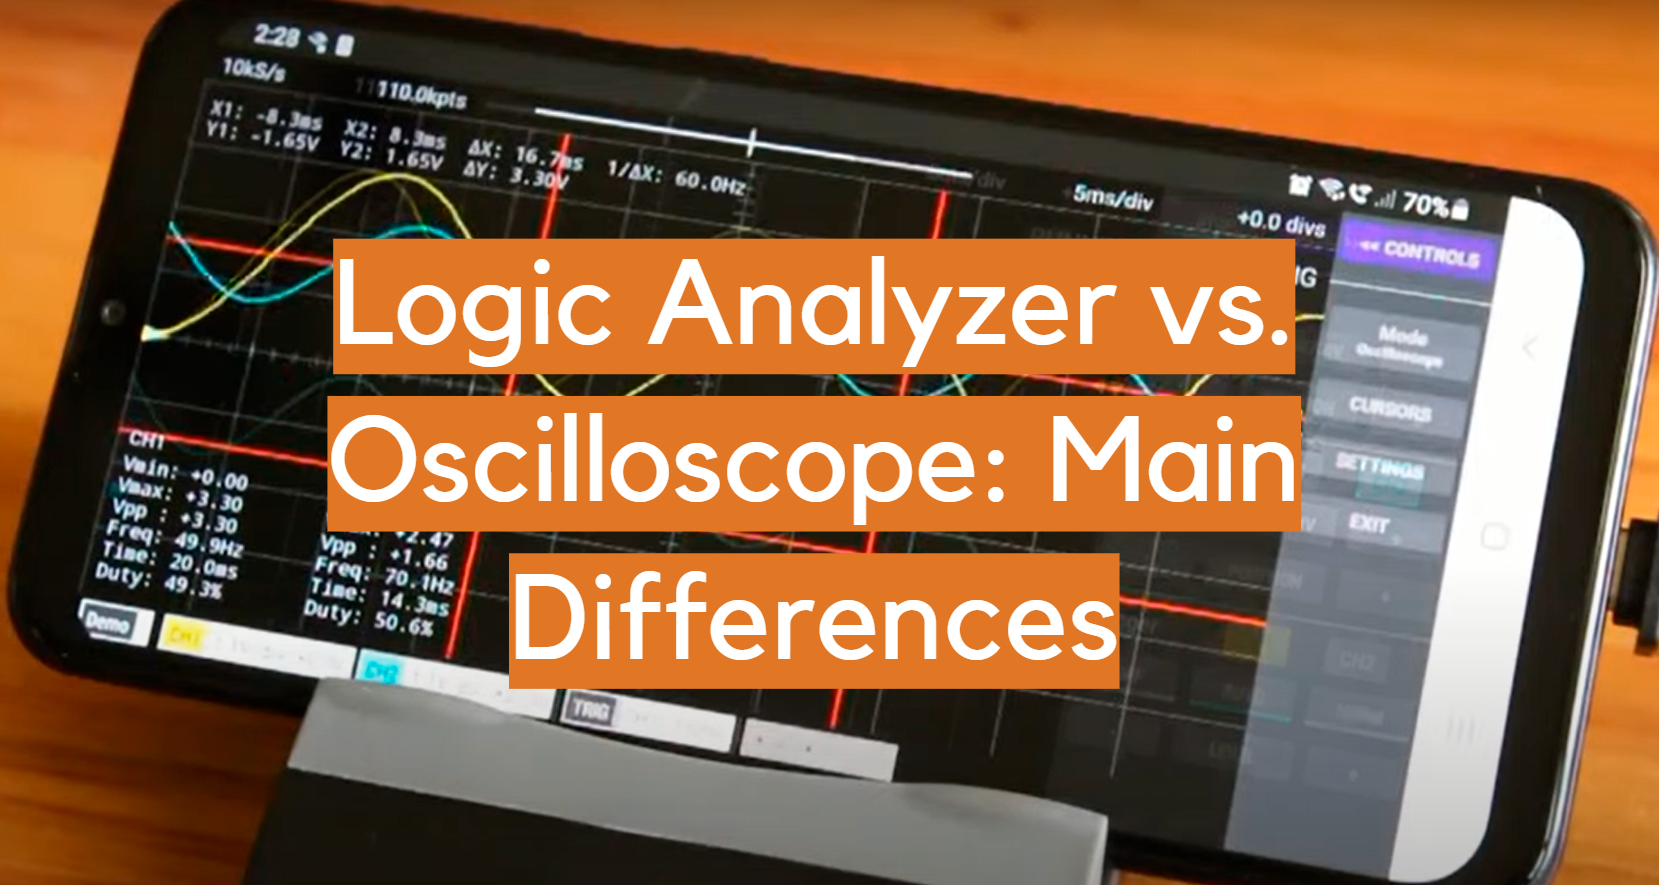 Analizador lógico vs. osciloscopio: principales diferencias